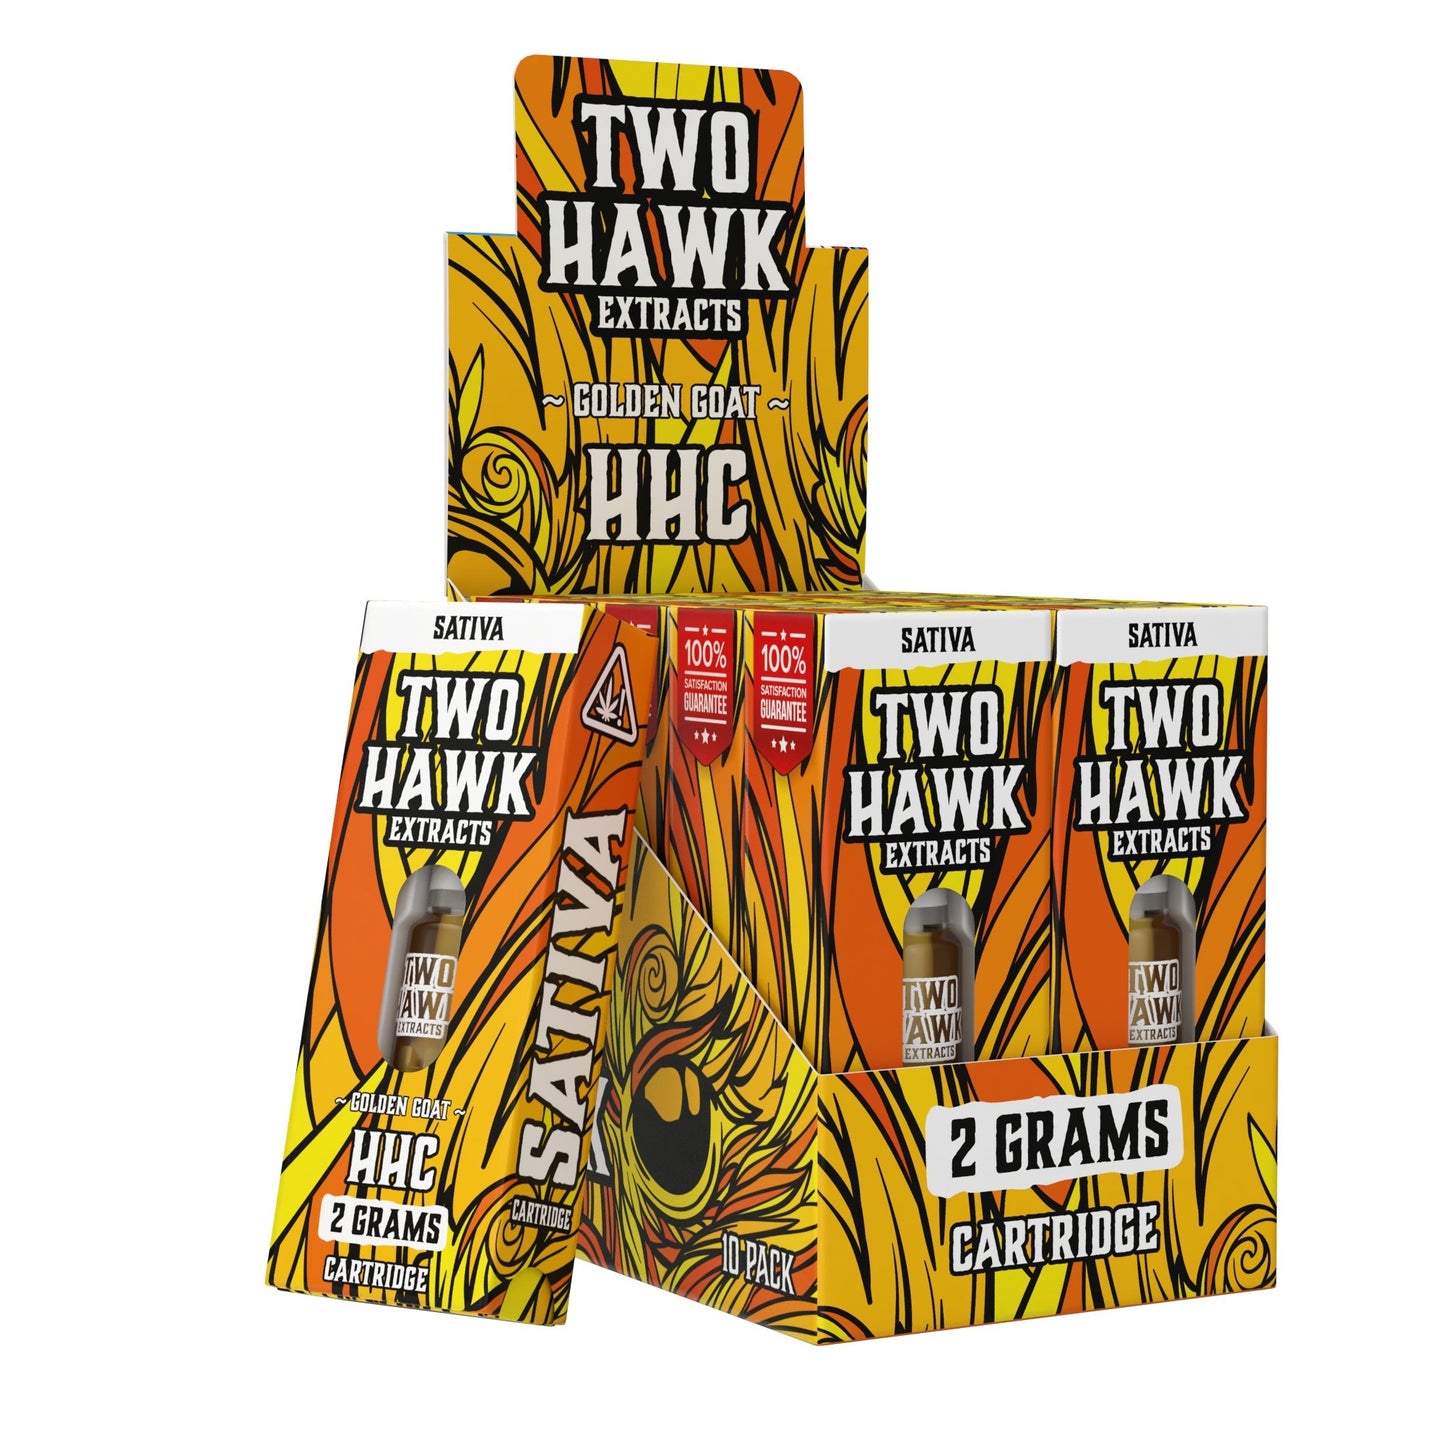 Golden Goat (sativa hybrid) - HHC - 2 GRAM Single box & open 10 pack - Cart - Two Hawk Extracts